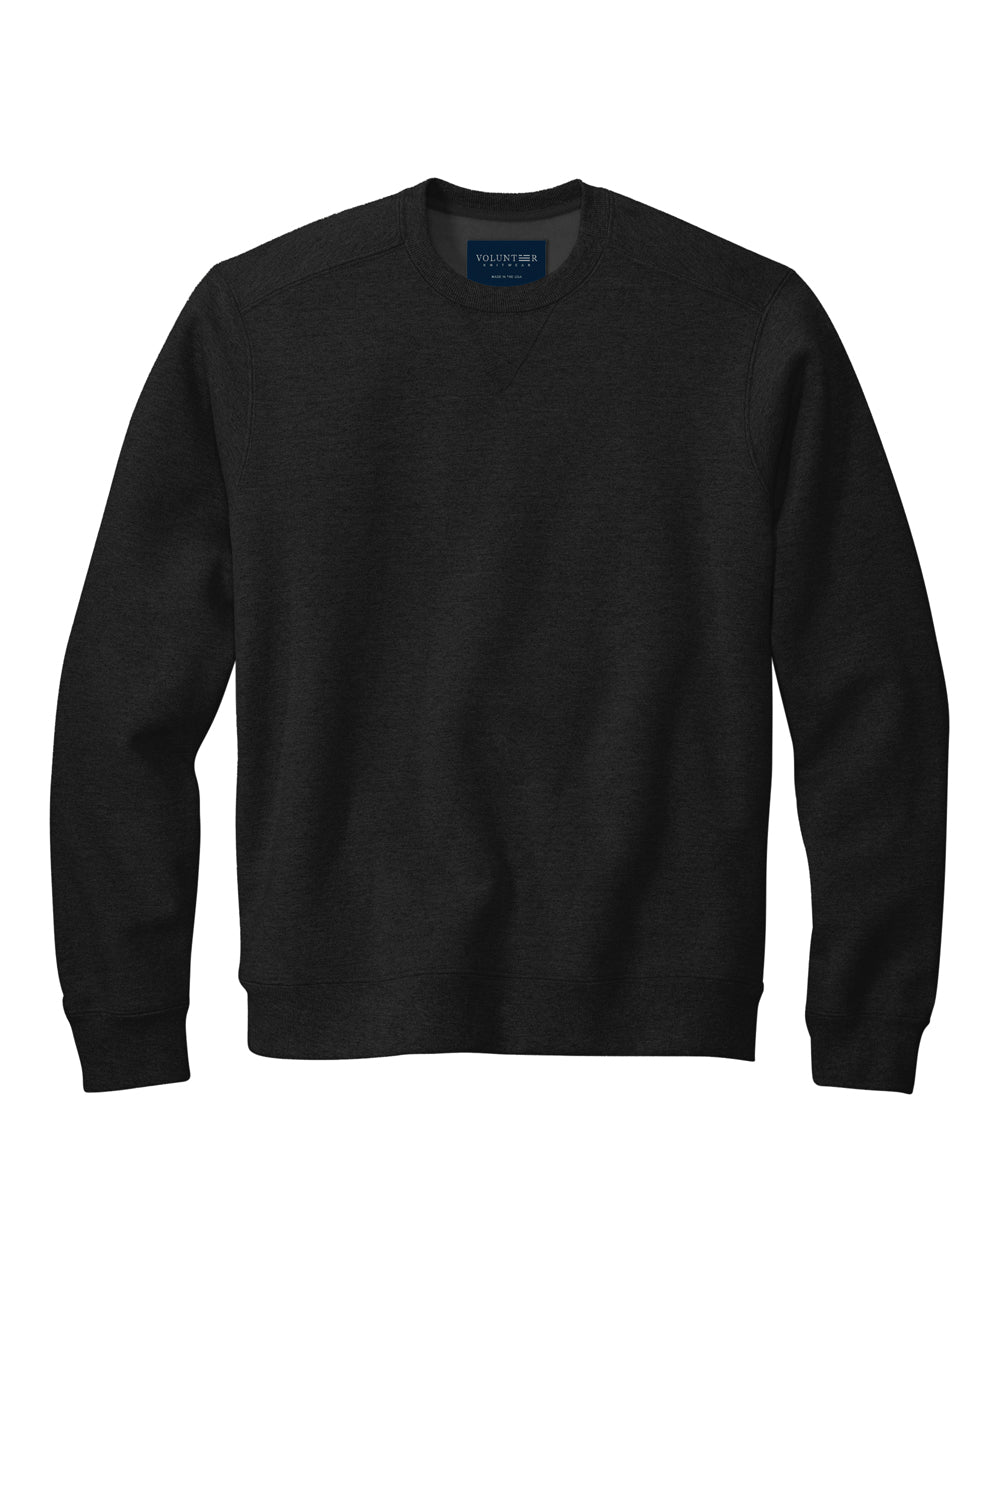 Volunteer Knitwear VL130 Chore Fleece Crewneck Sweatshirt Deep Black Flat Front